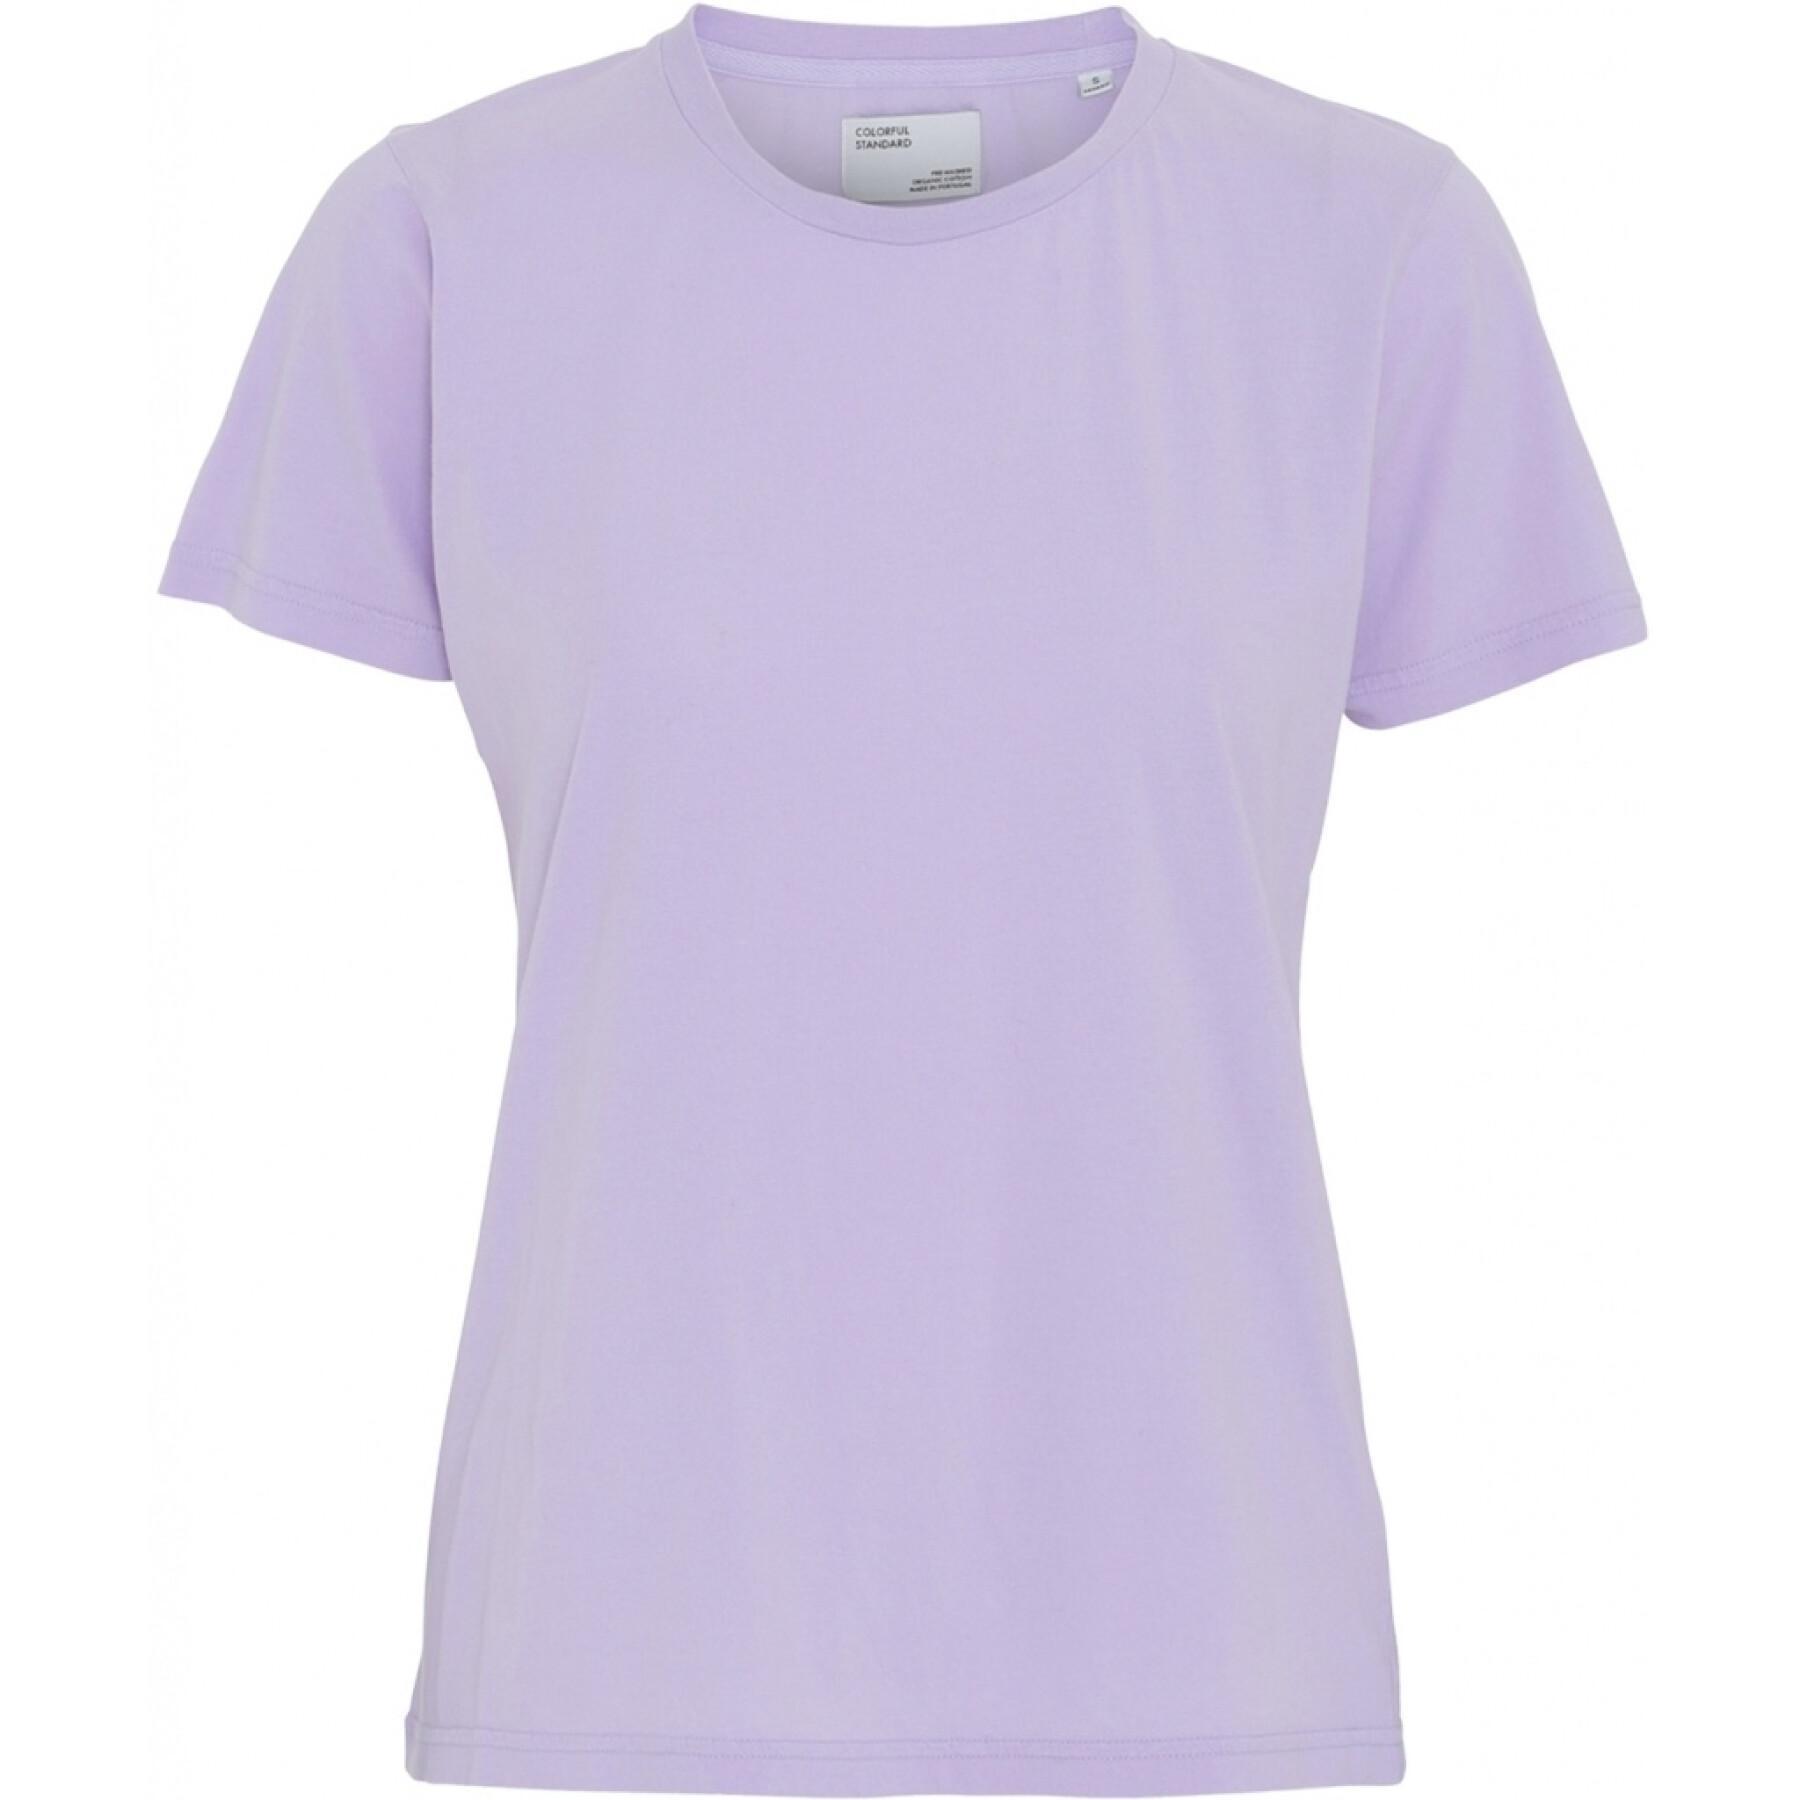 Women's T-shirt Colorful Standard Light Organic soft lavender